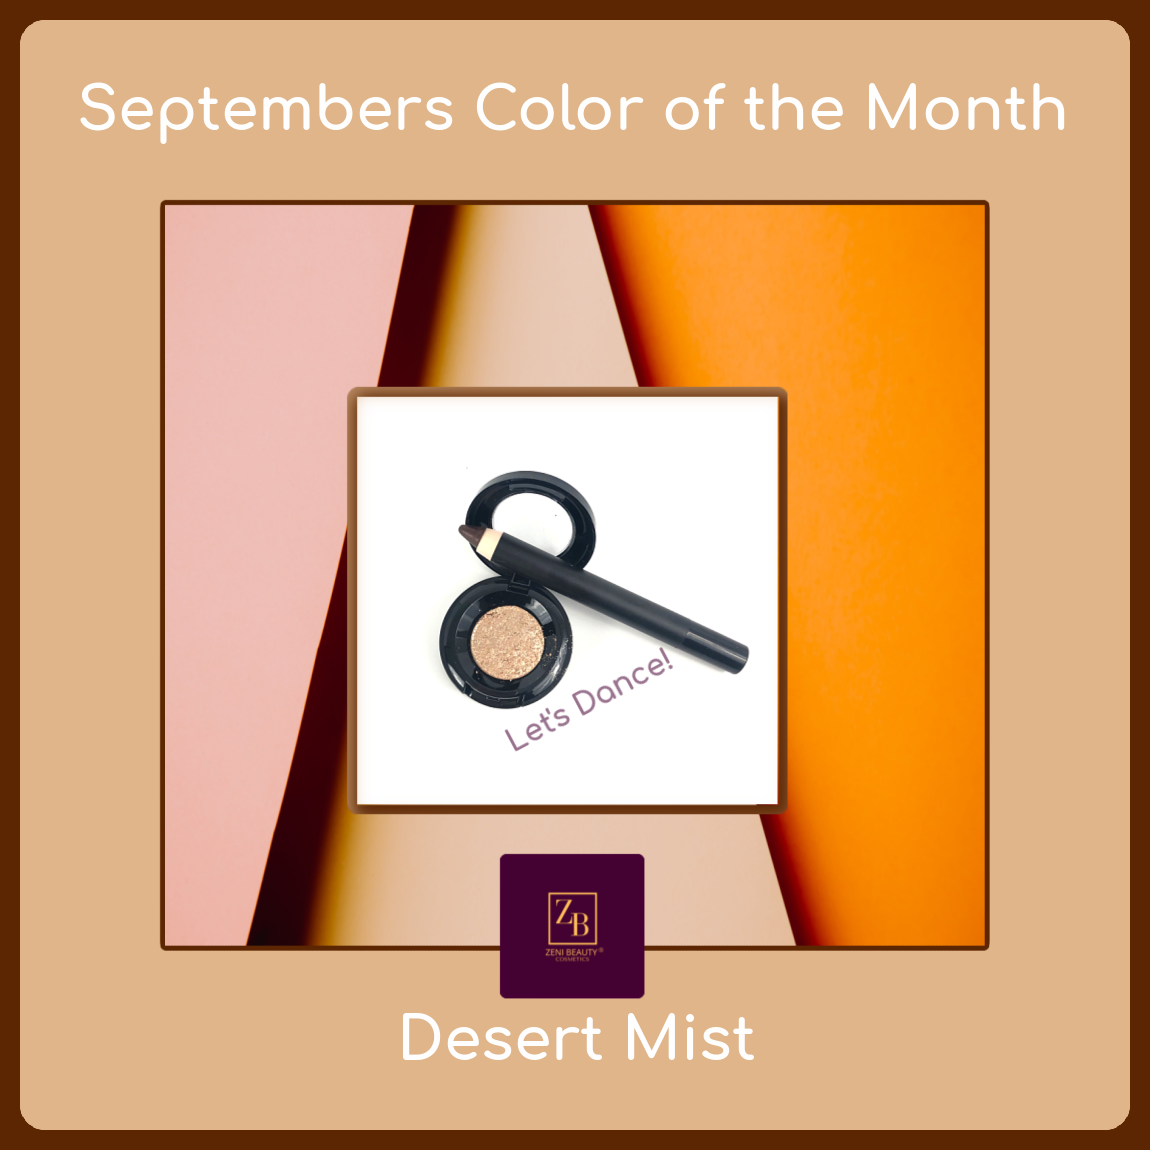 September's Color of the Month is Desert Mist